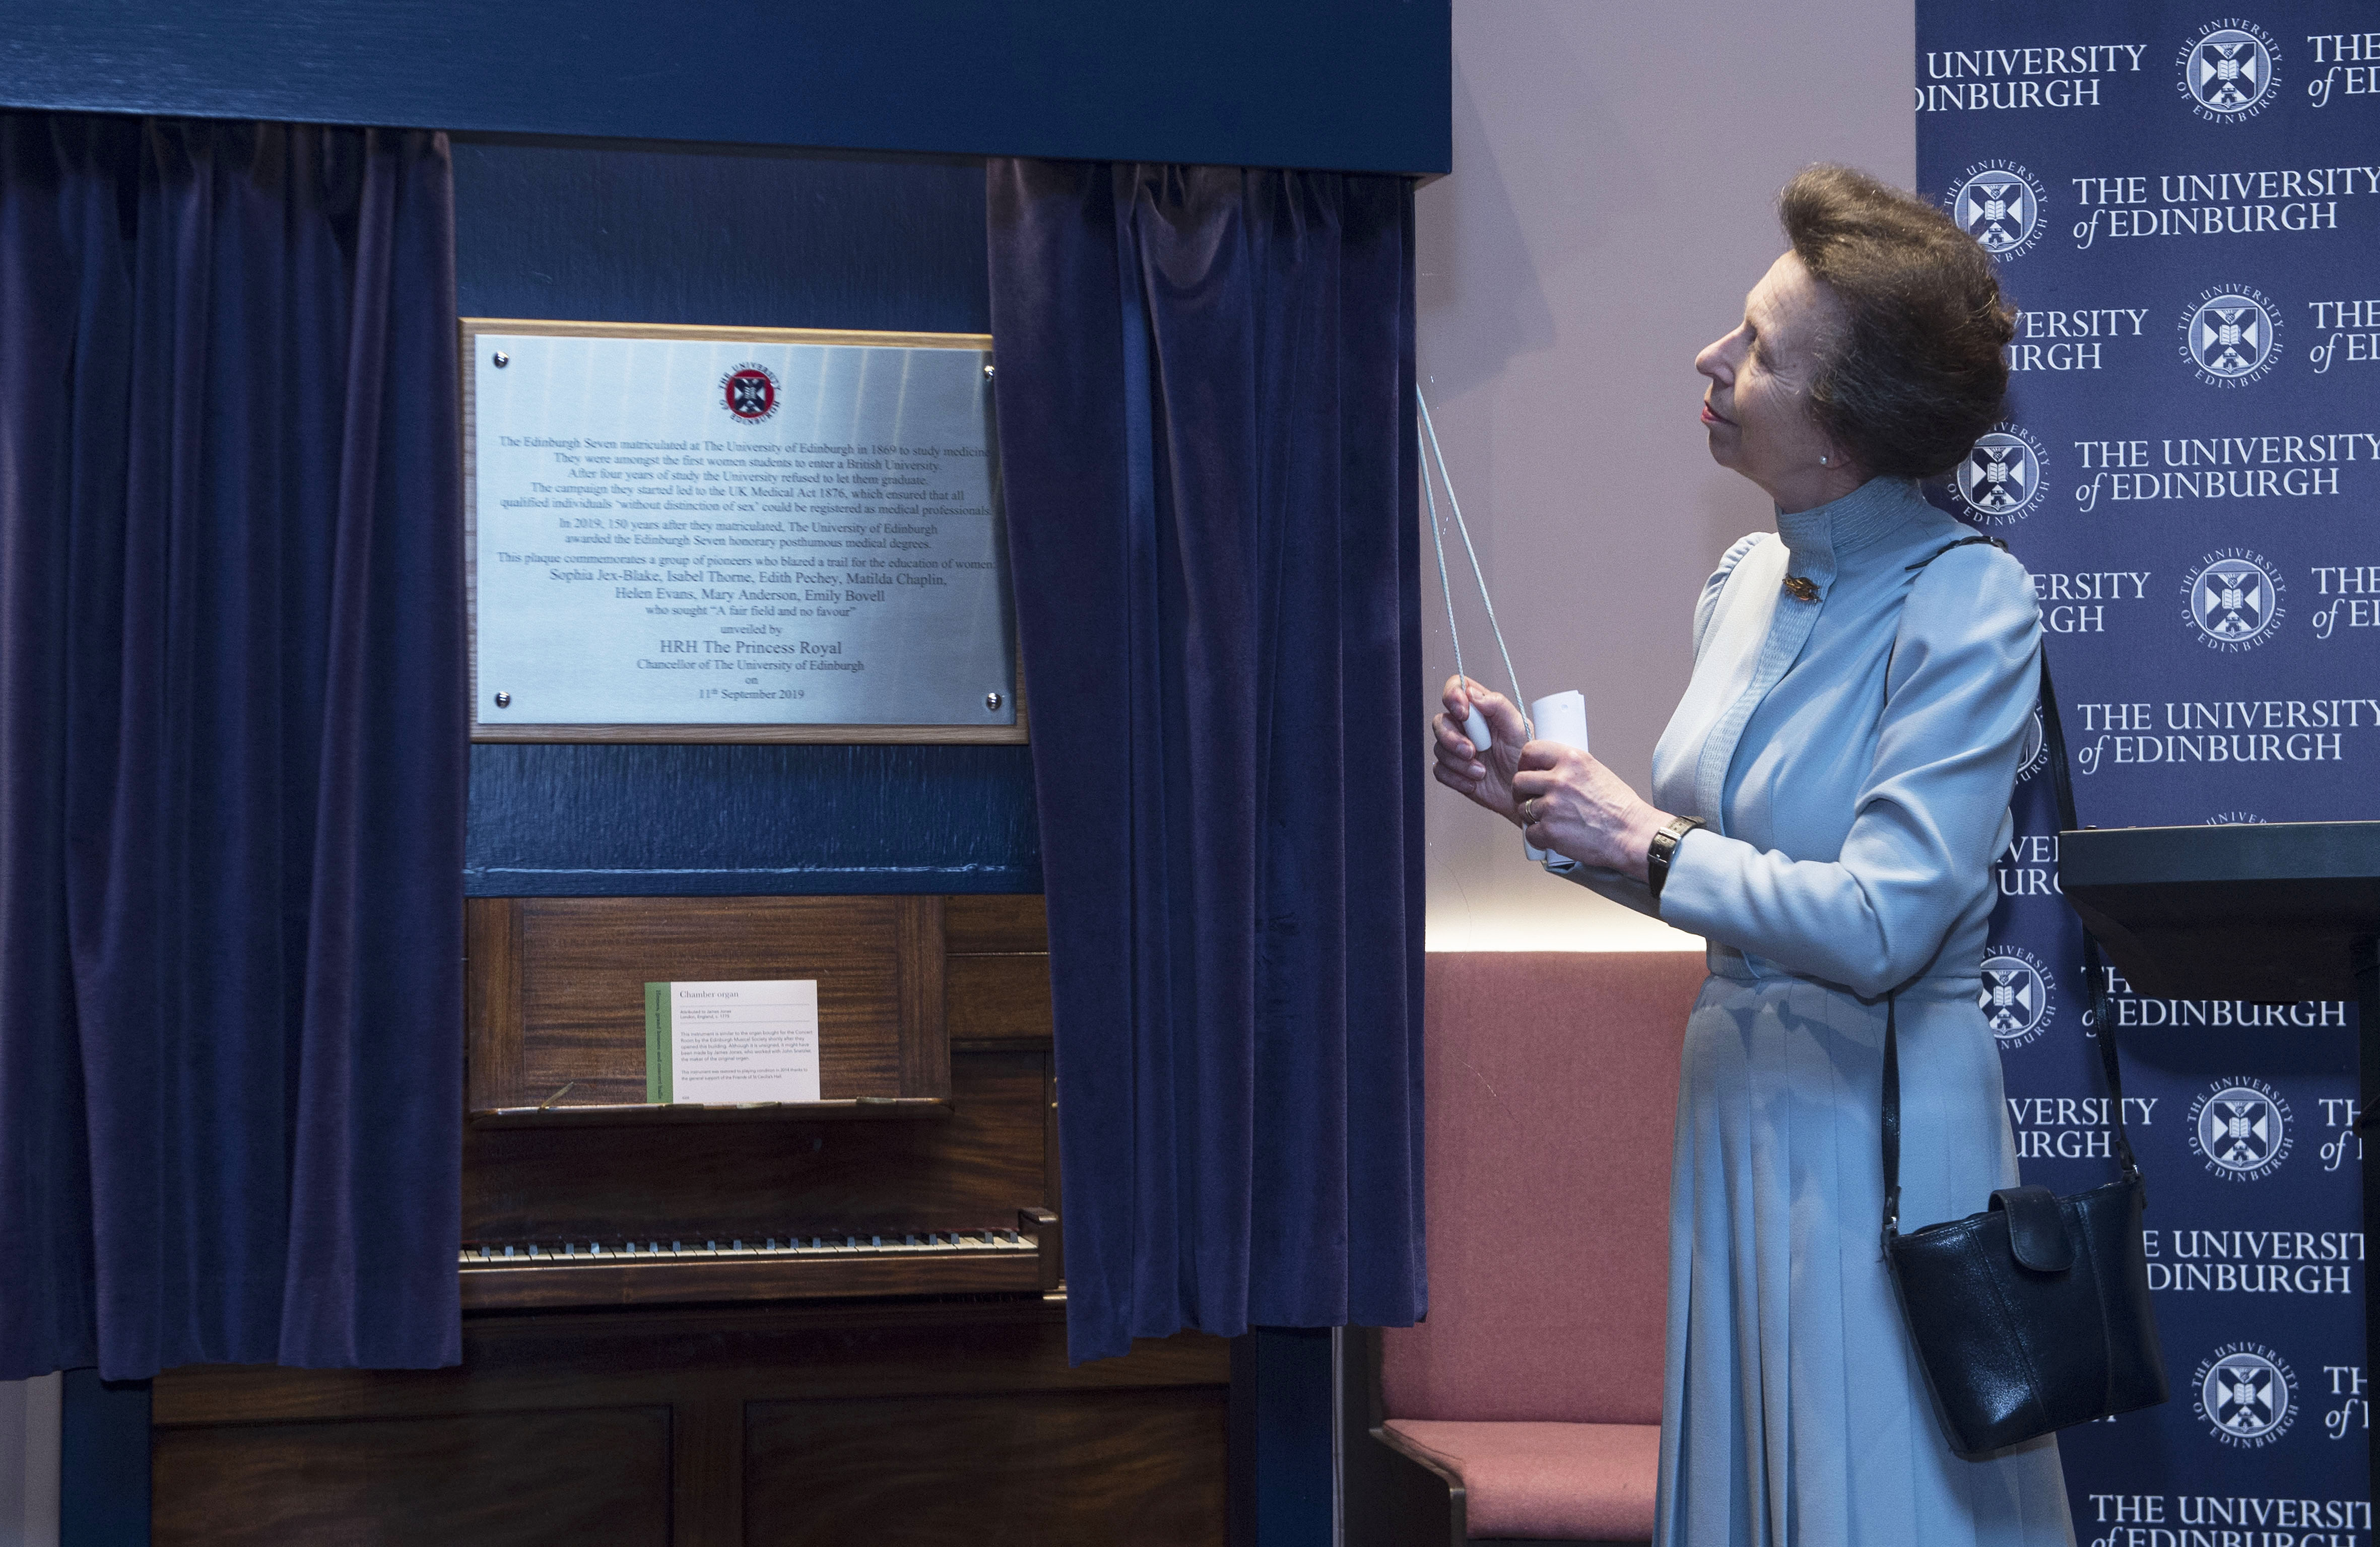 The Princess Royal unveils a plaque at The University of Edinburgh in honour of the Edinburgh Seven